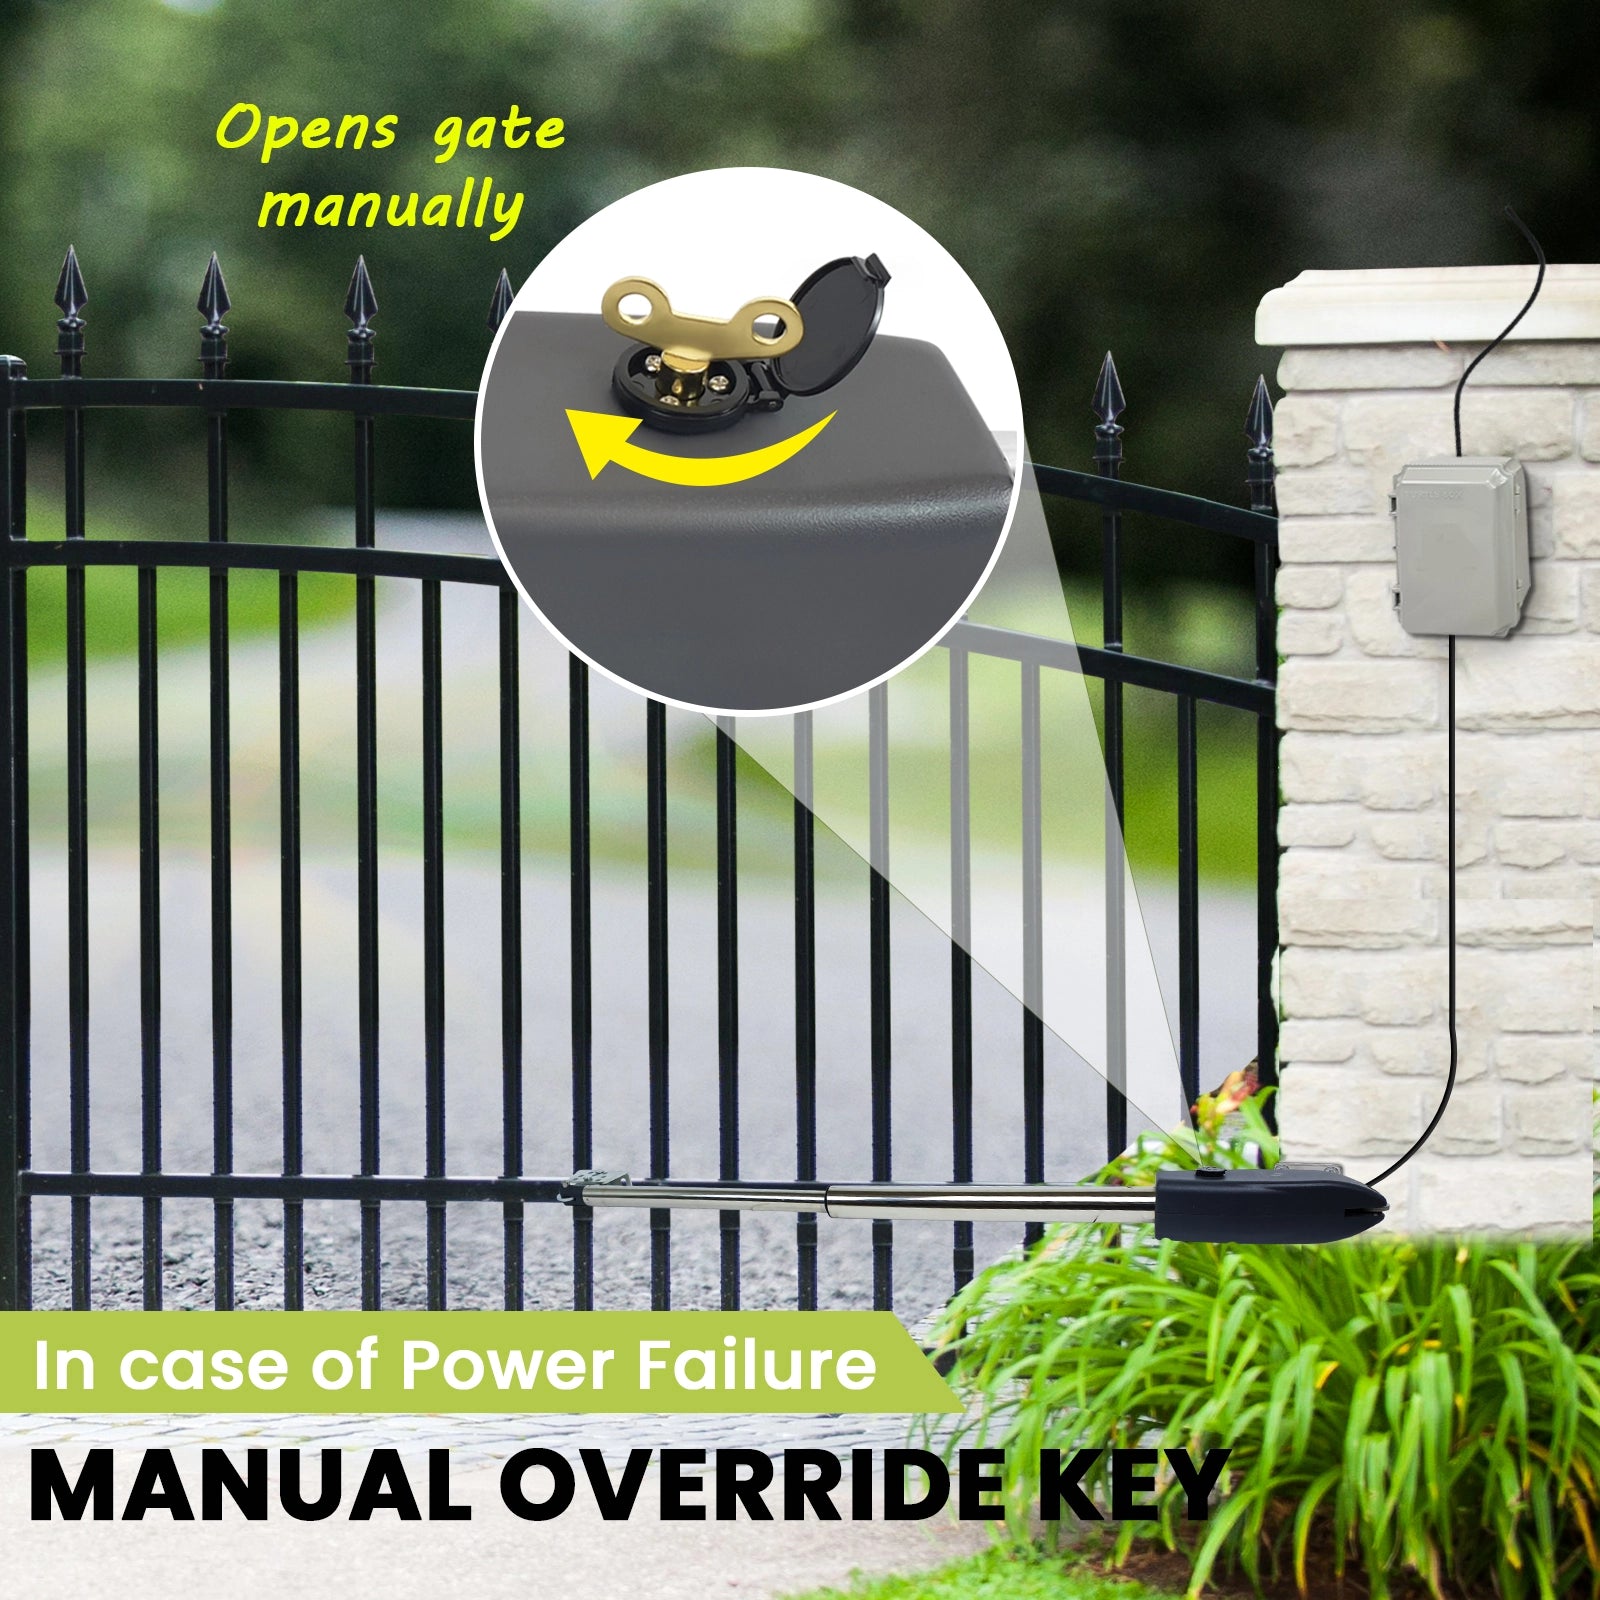 Manual Override Key For Gate Opener